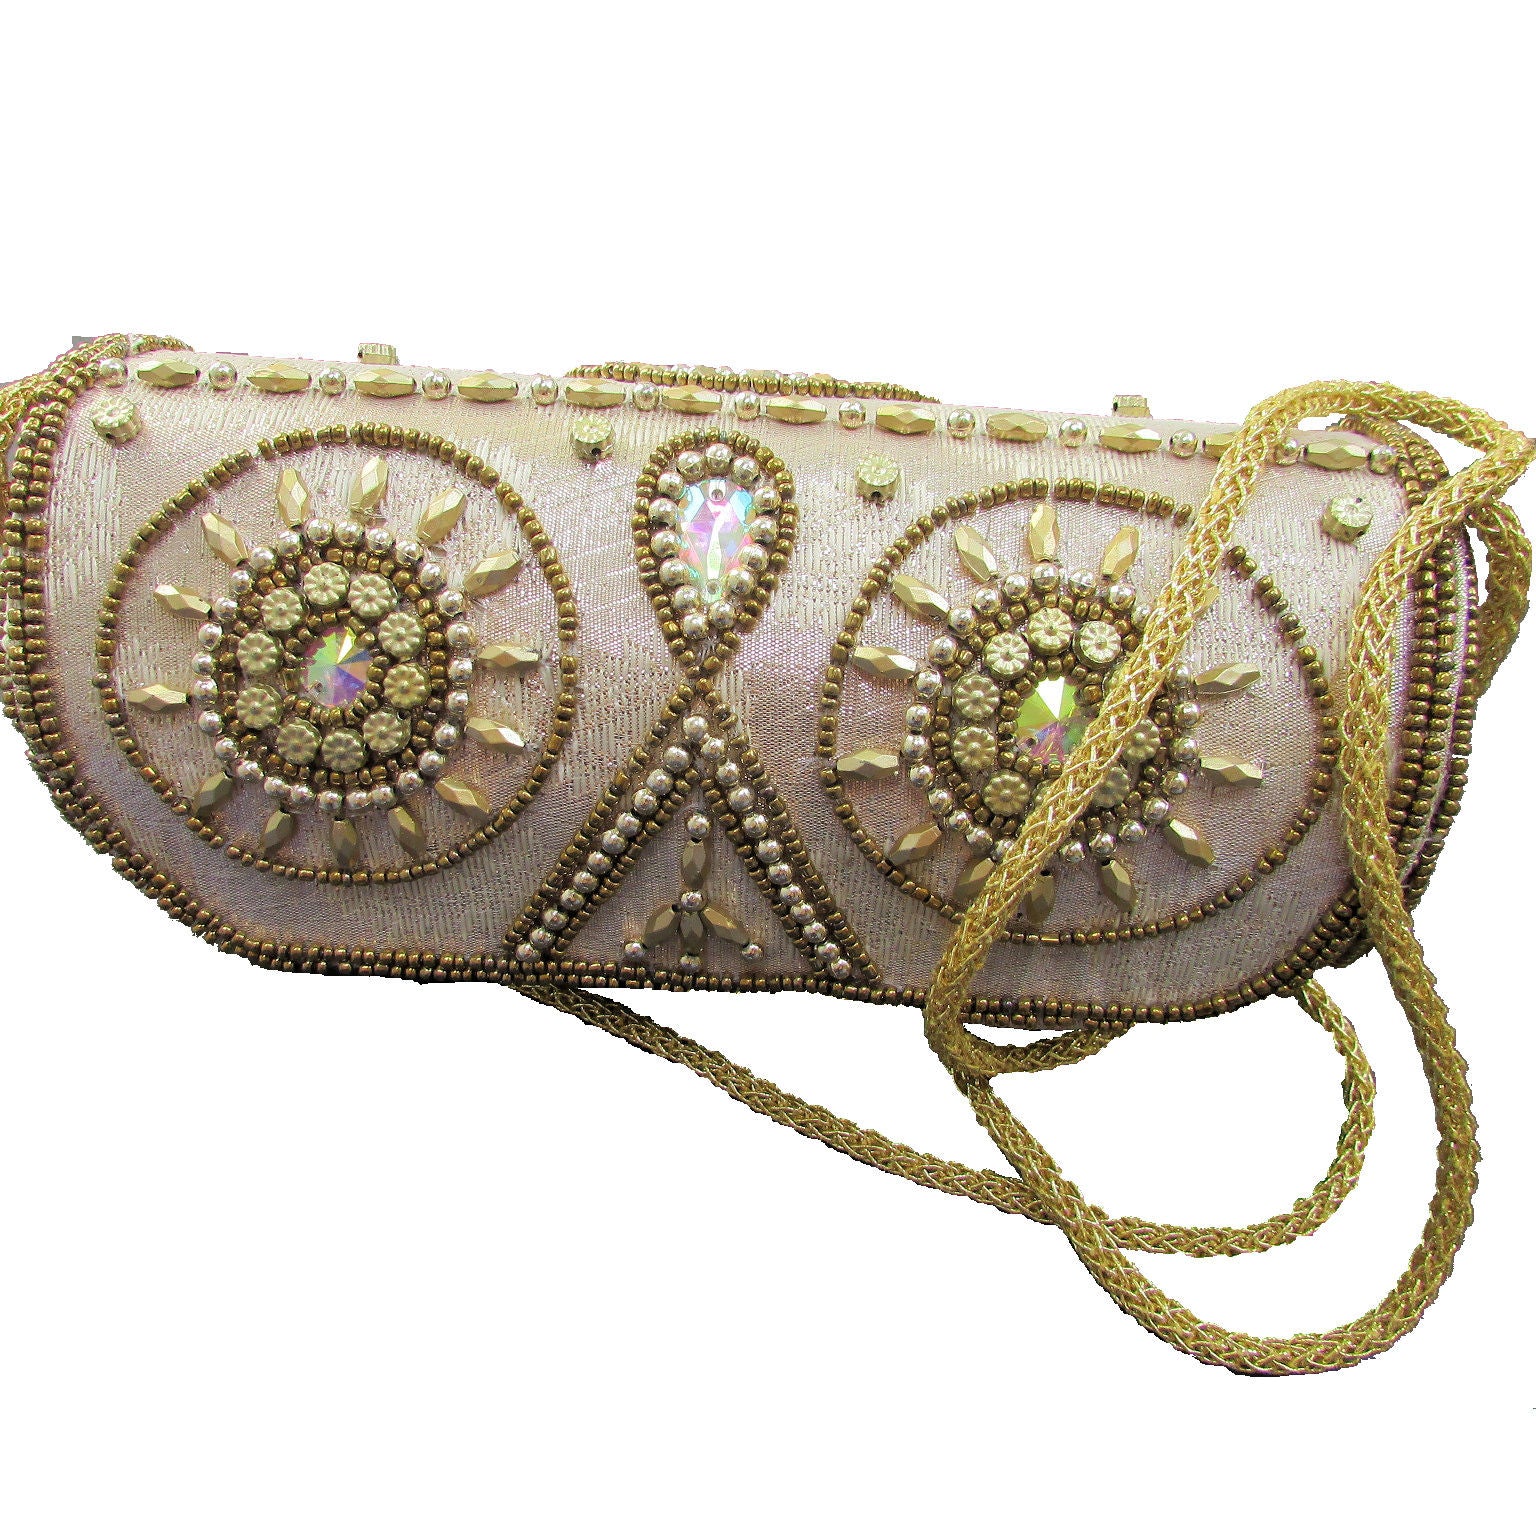 Indian Bride Handbag, Clutch Wedding Bag, HBS# 408